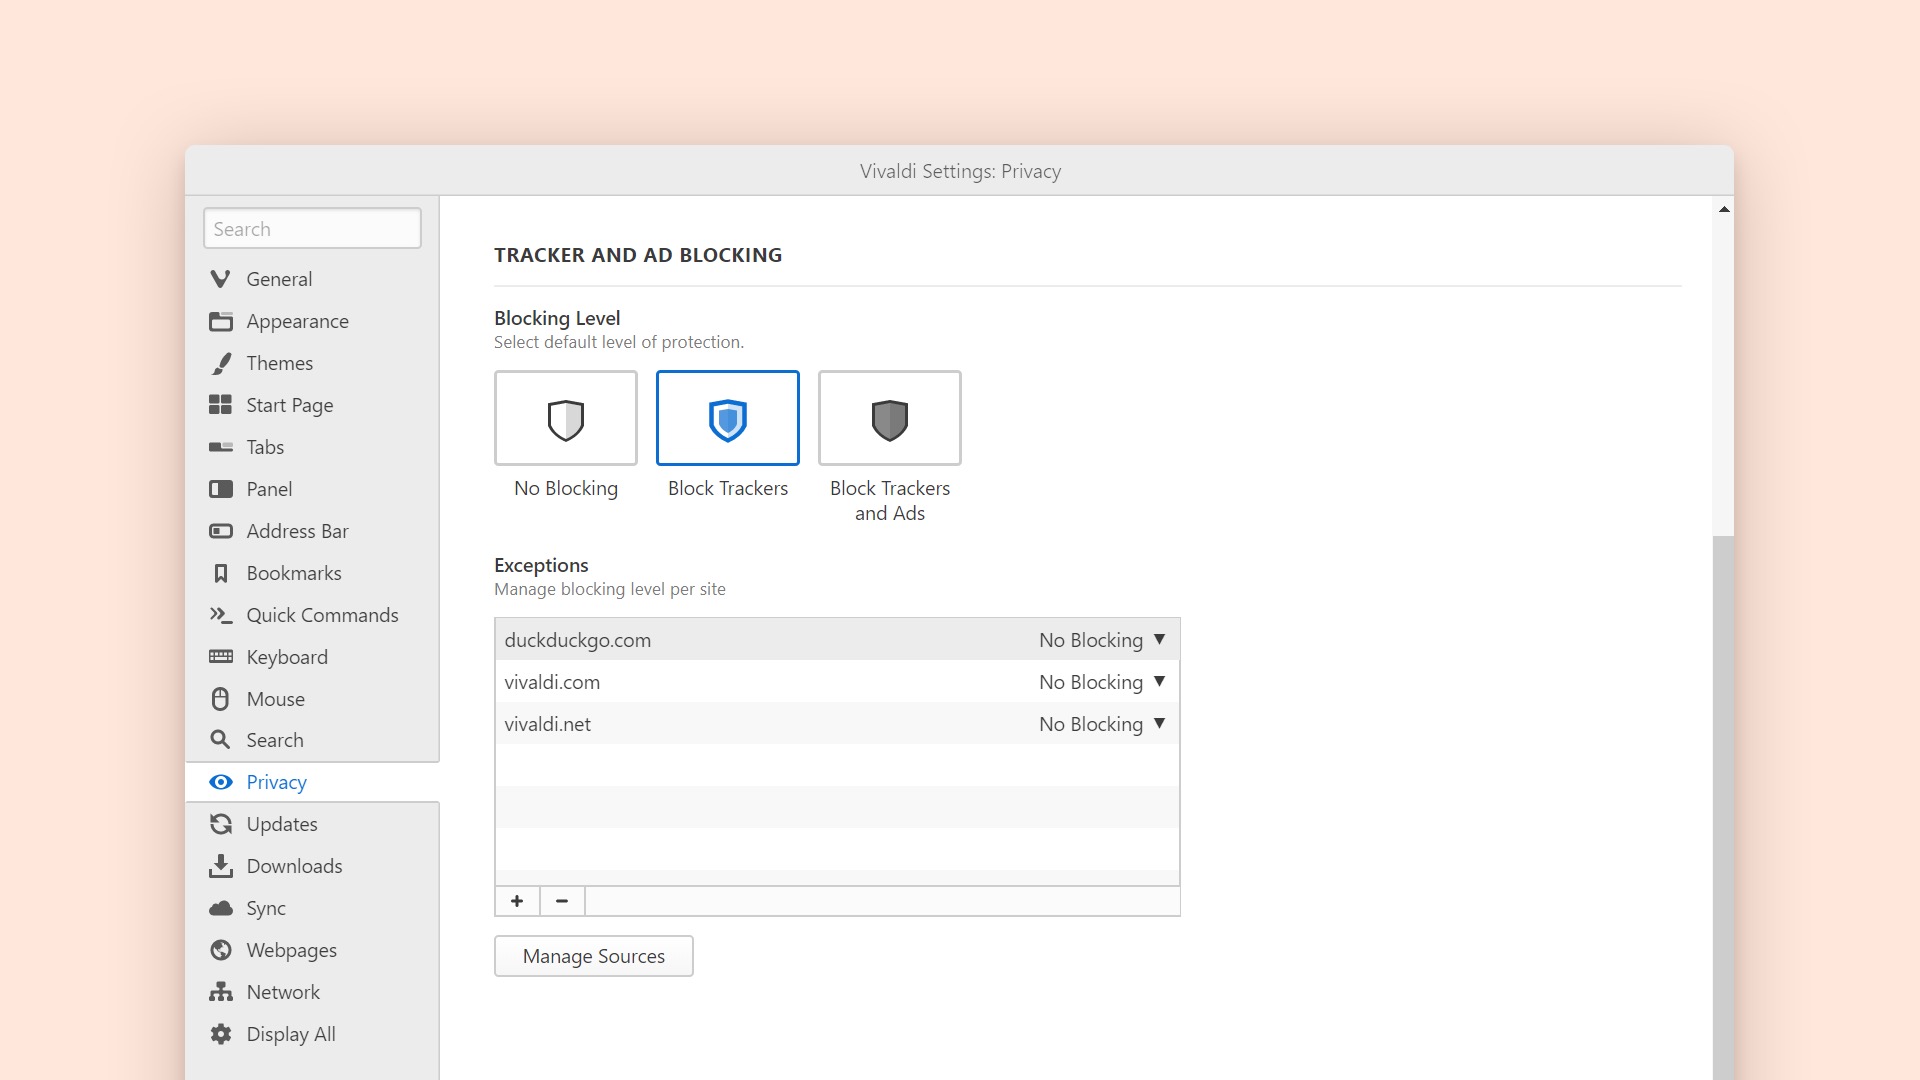 vivaldi desktop features privacy settings